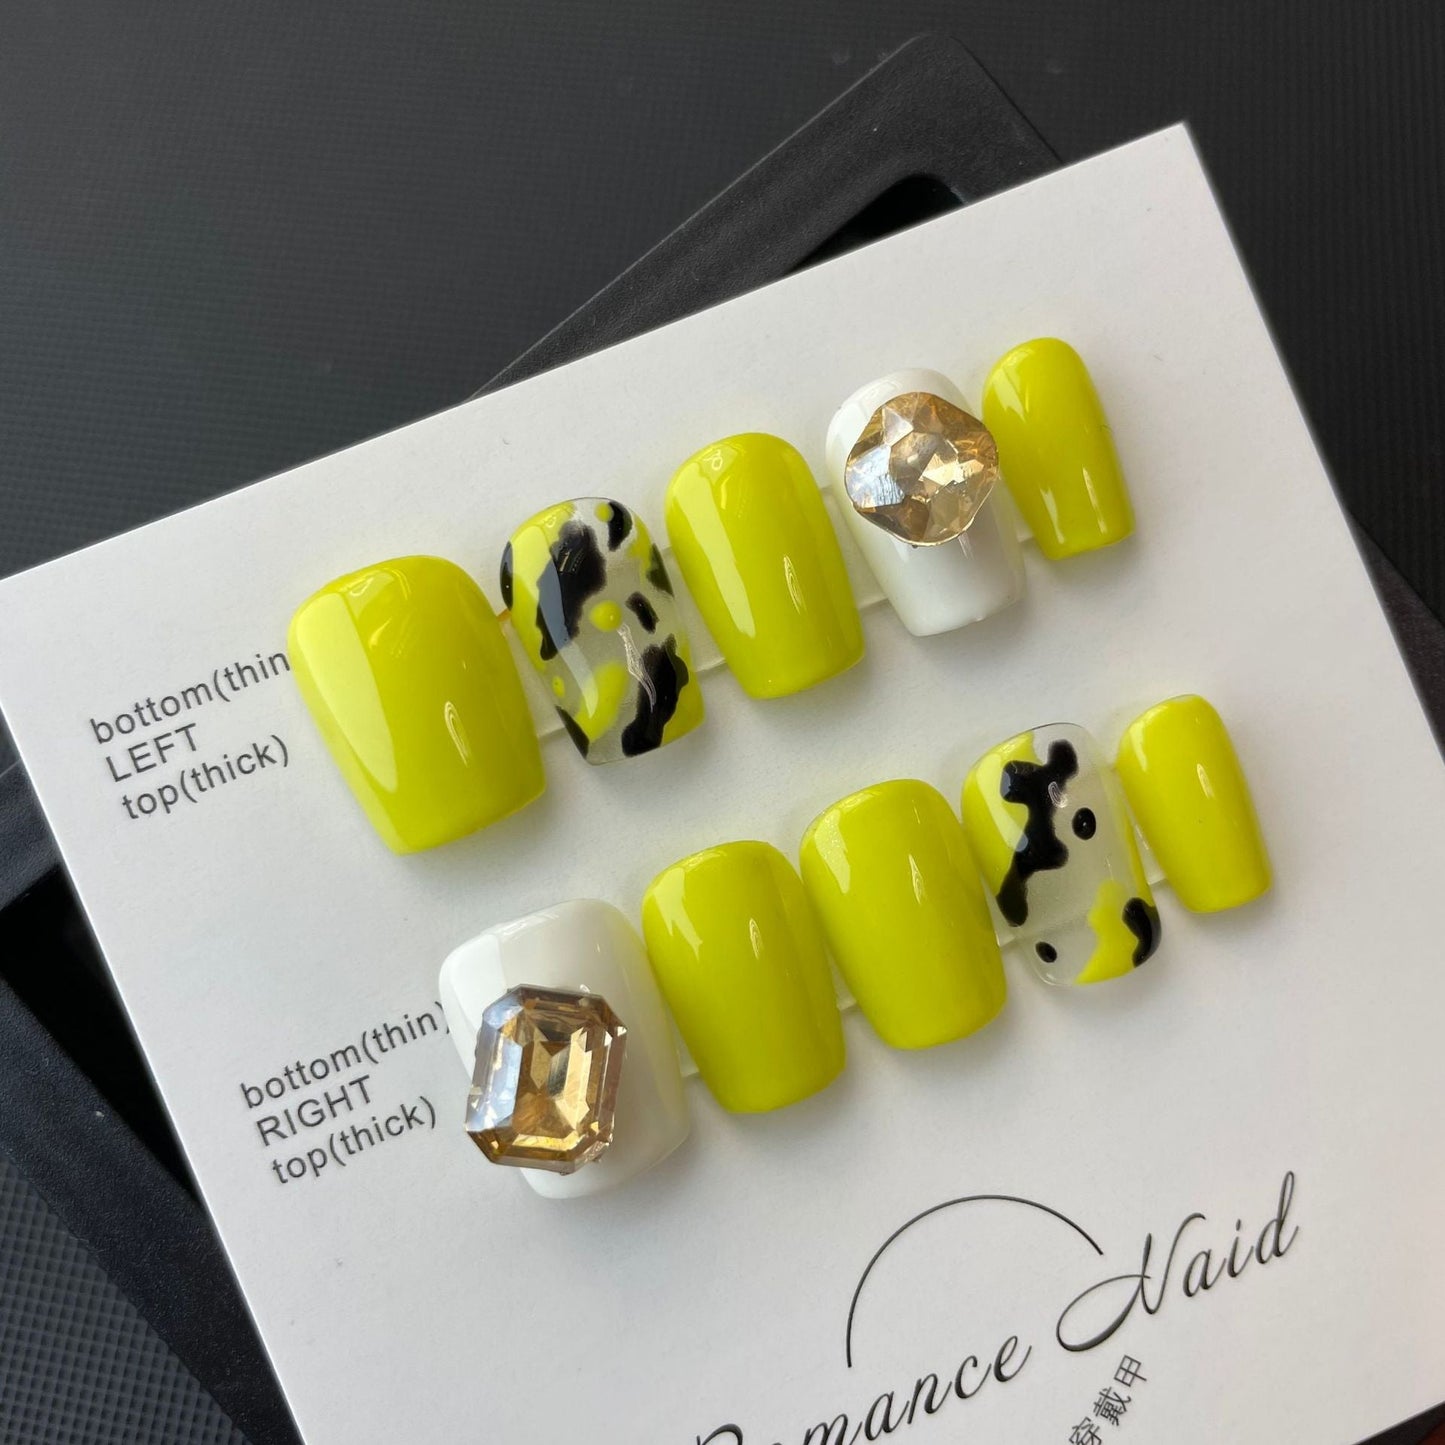 707 Hand drawn graffiti style press on nails 100% handmade false nails yellow white